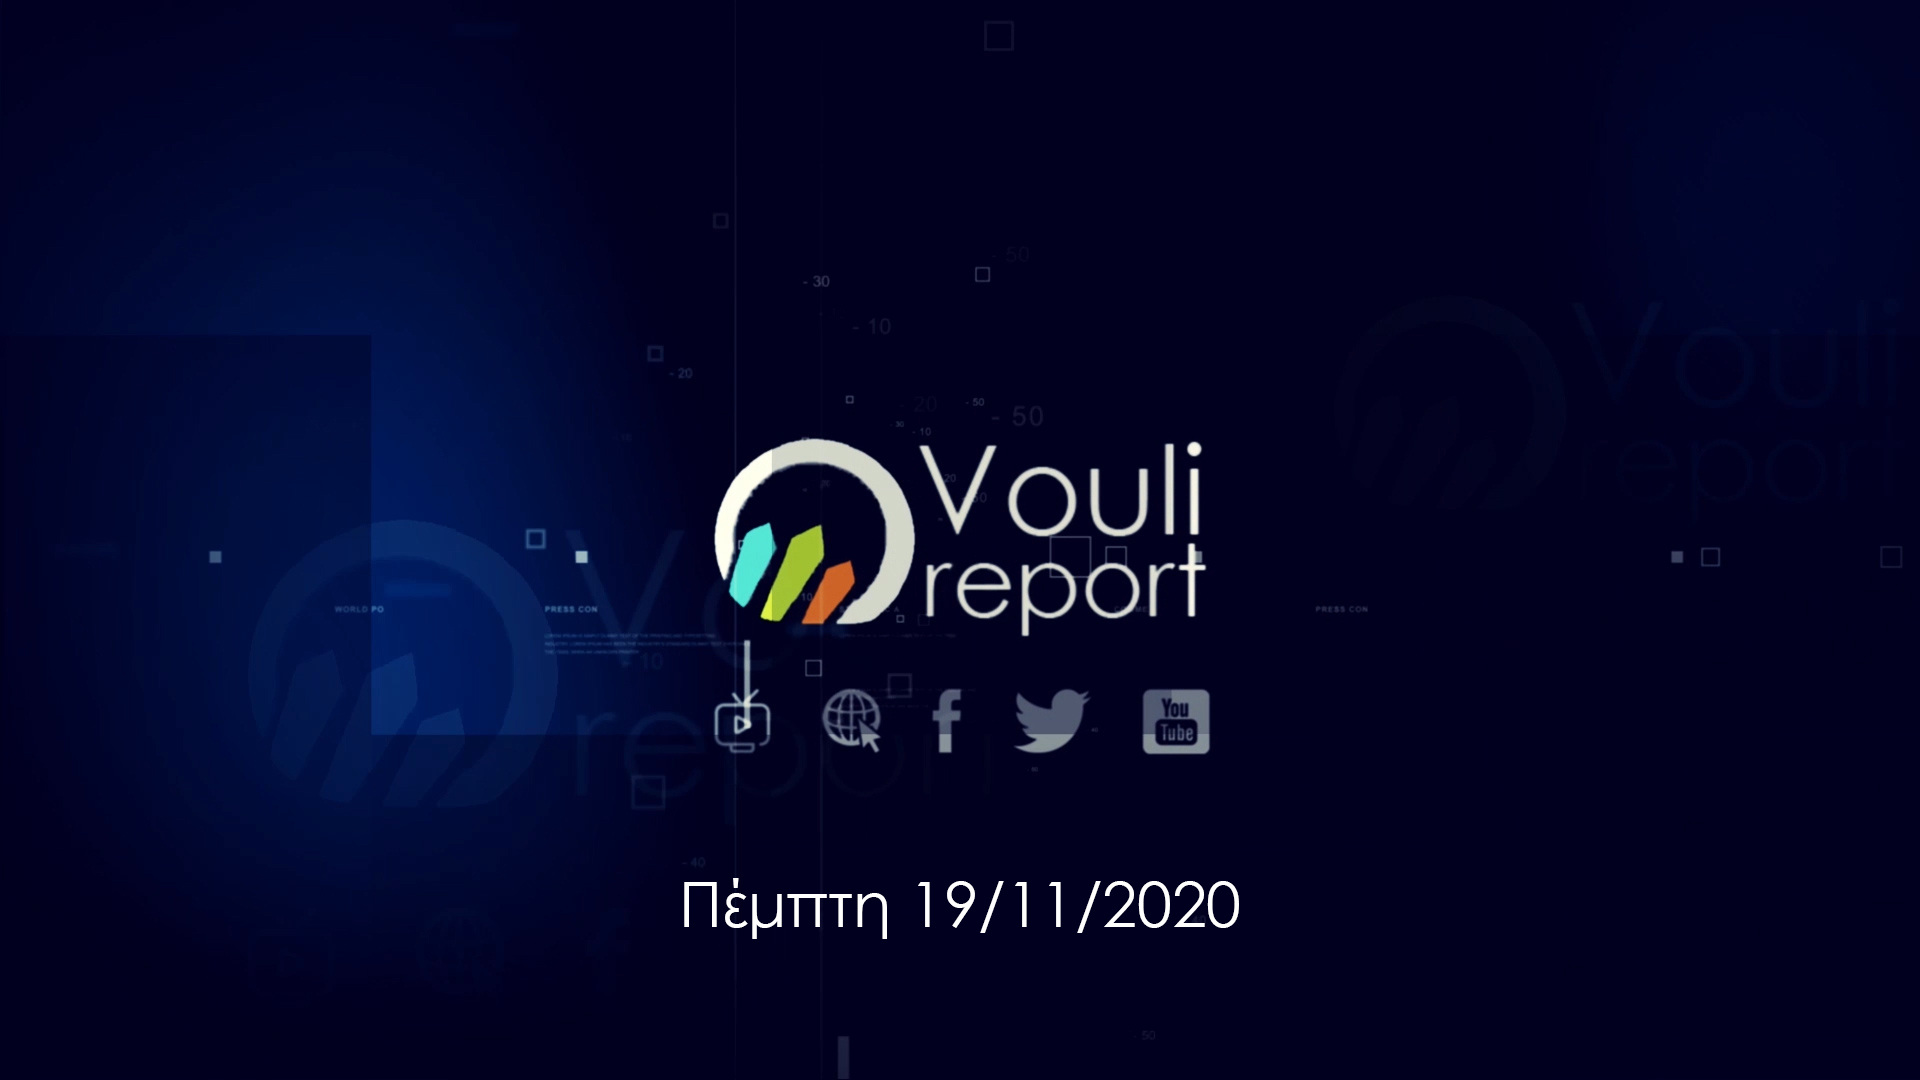 Vouli report | 19/11/2020